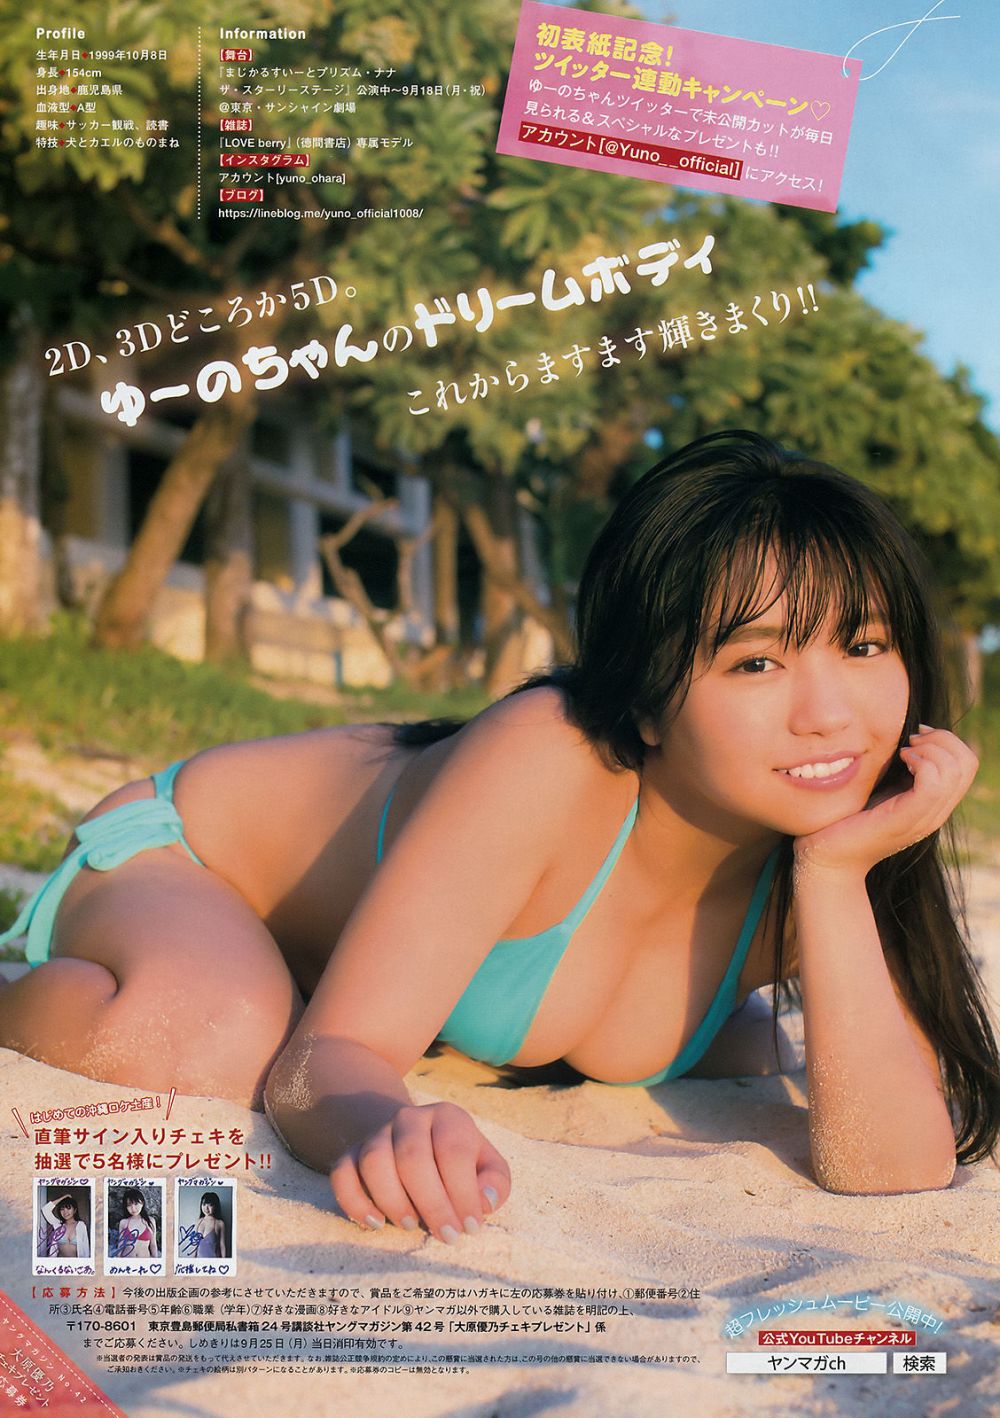 Yuno Ohara Sexy and Hottest Photos , Latest Pics